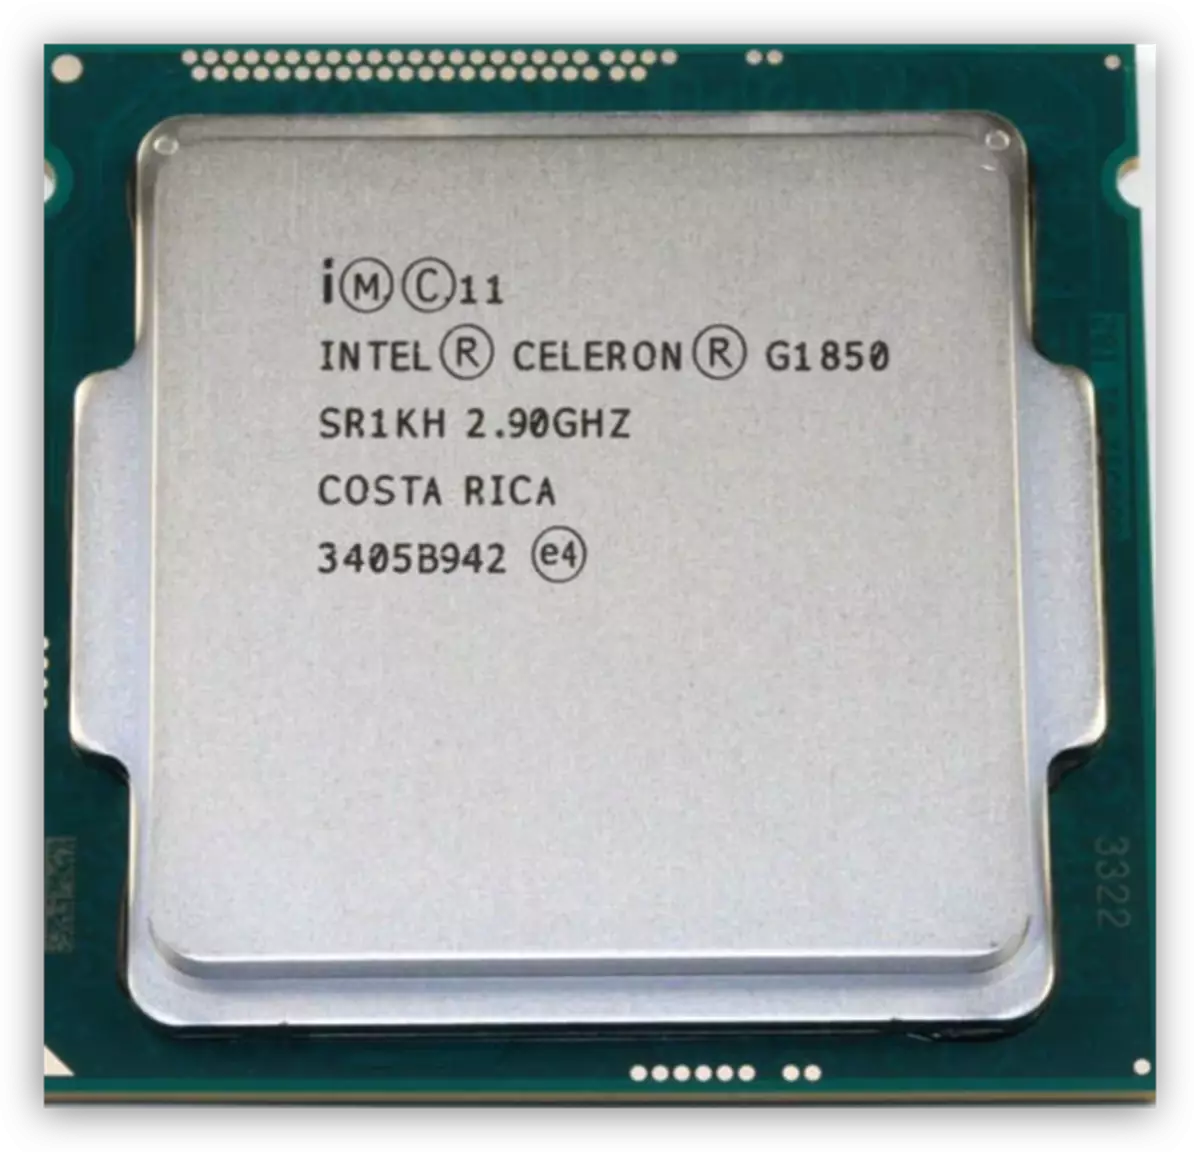 Celeron G1850 procesoro pri arkitekturo Haswell